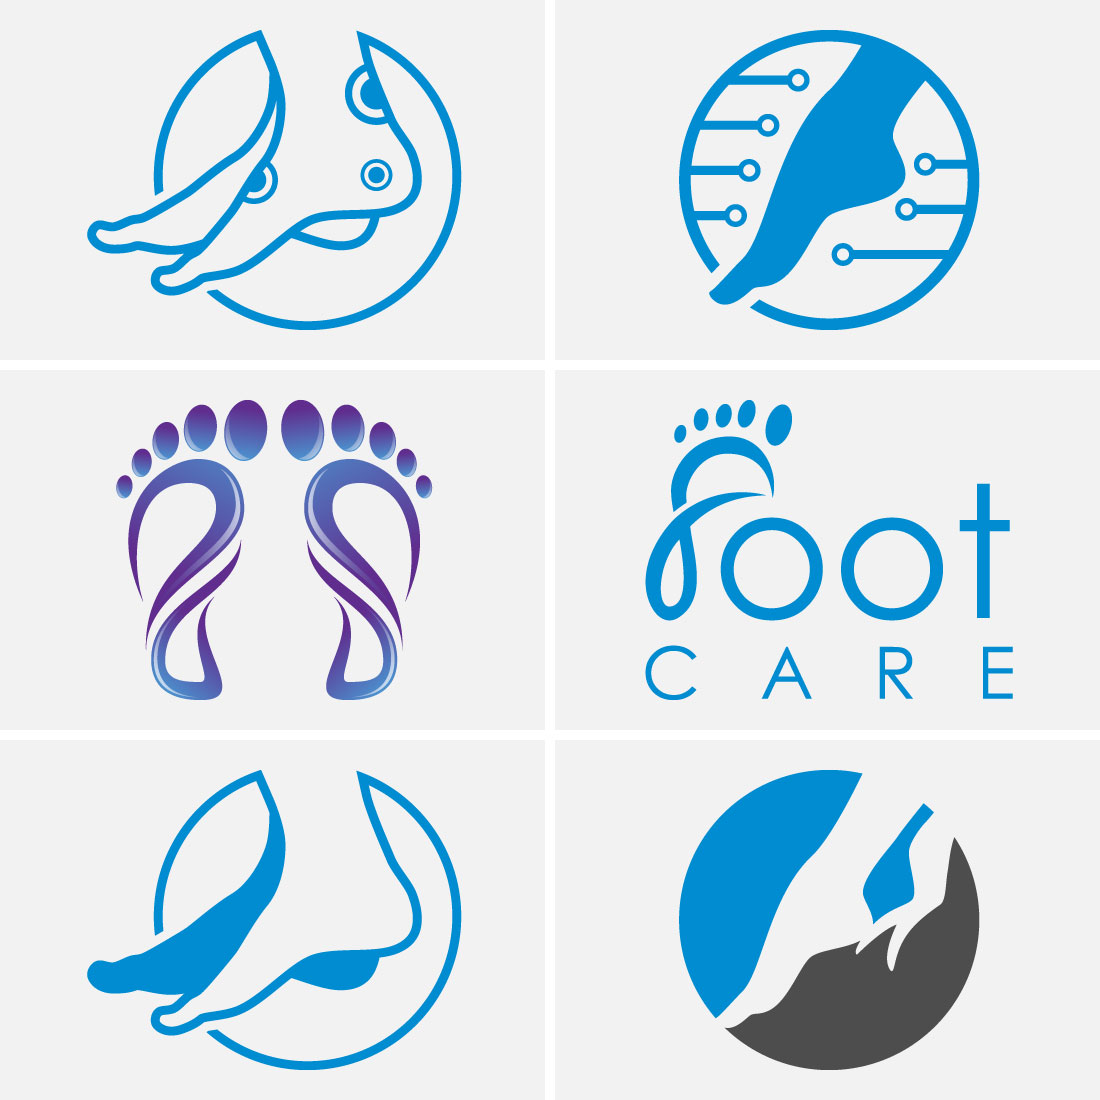 Foot Care Logo Design image preview.